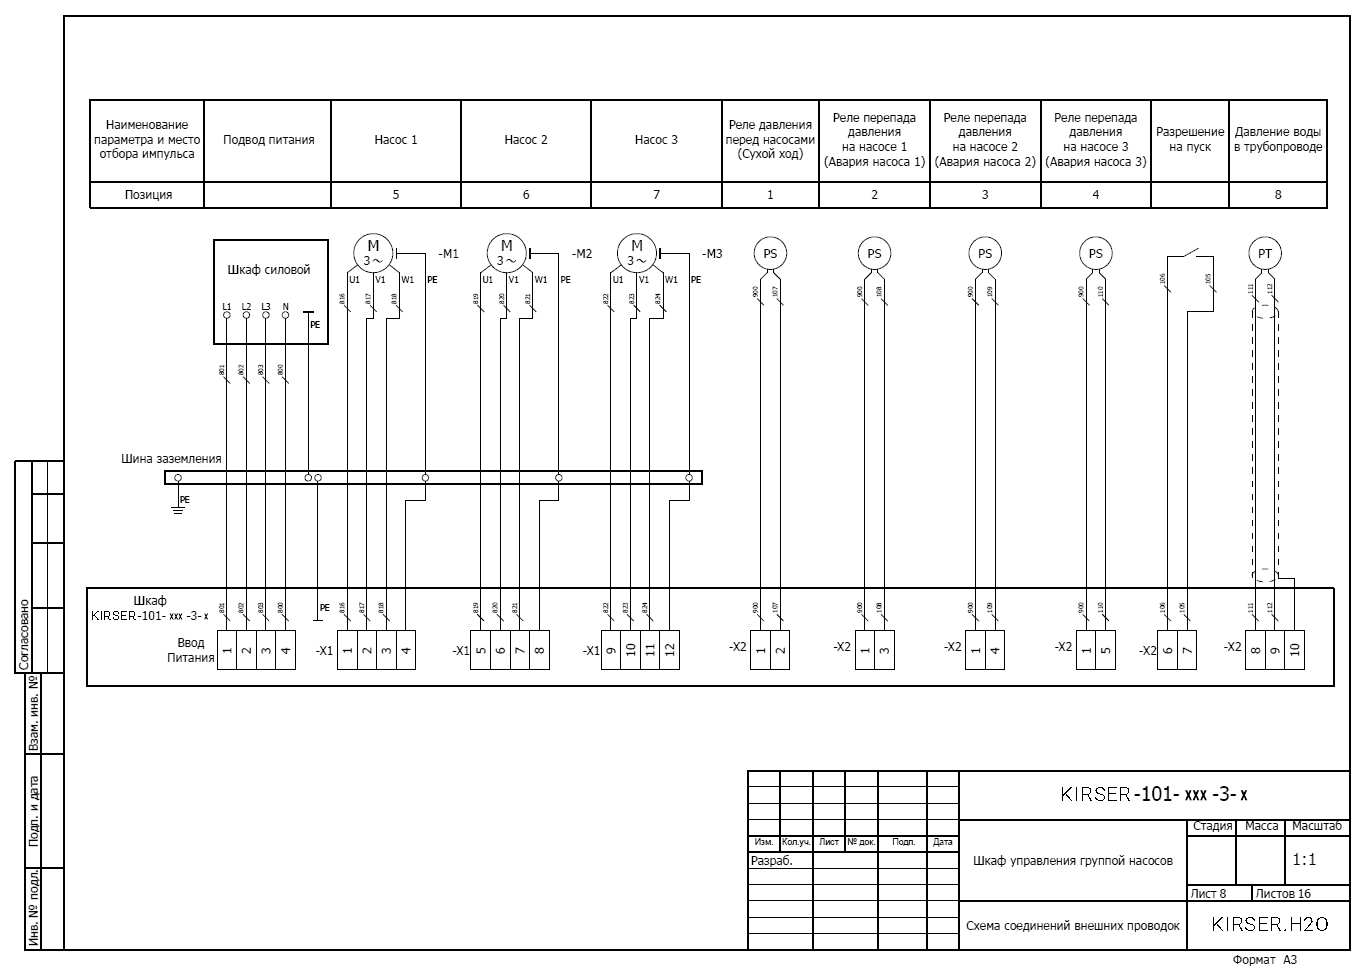 Таблица внутренних соединений